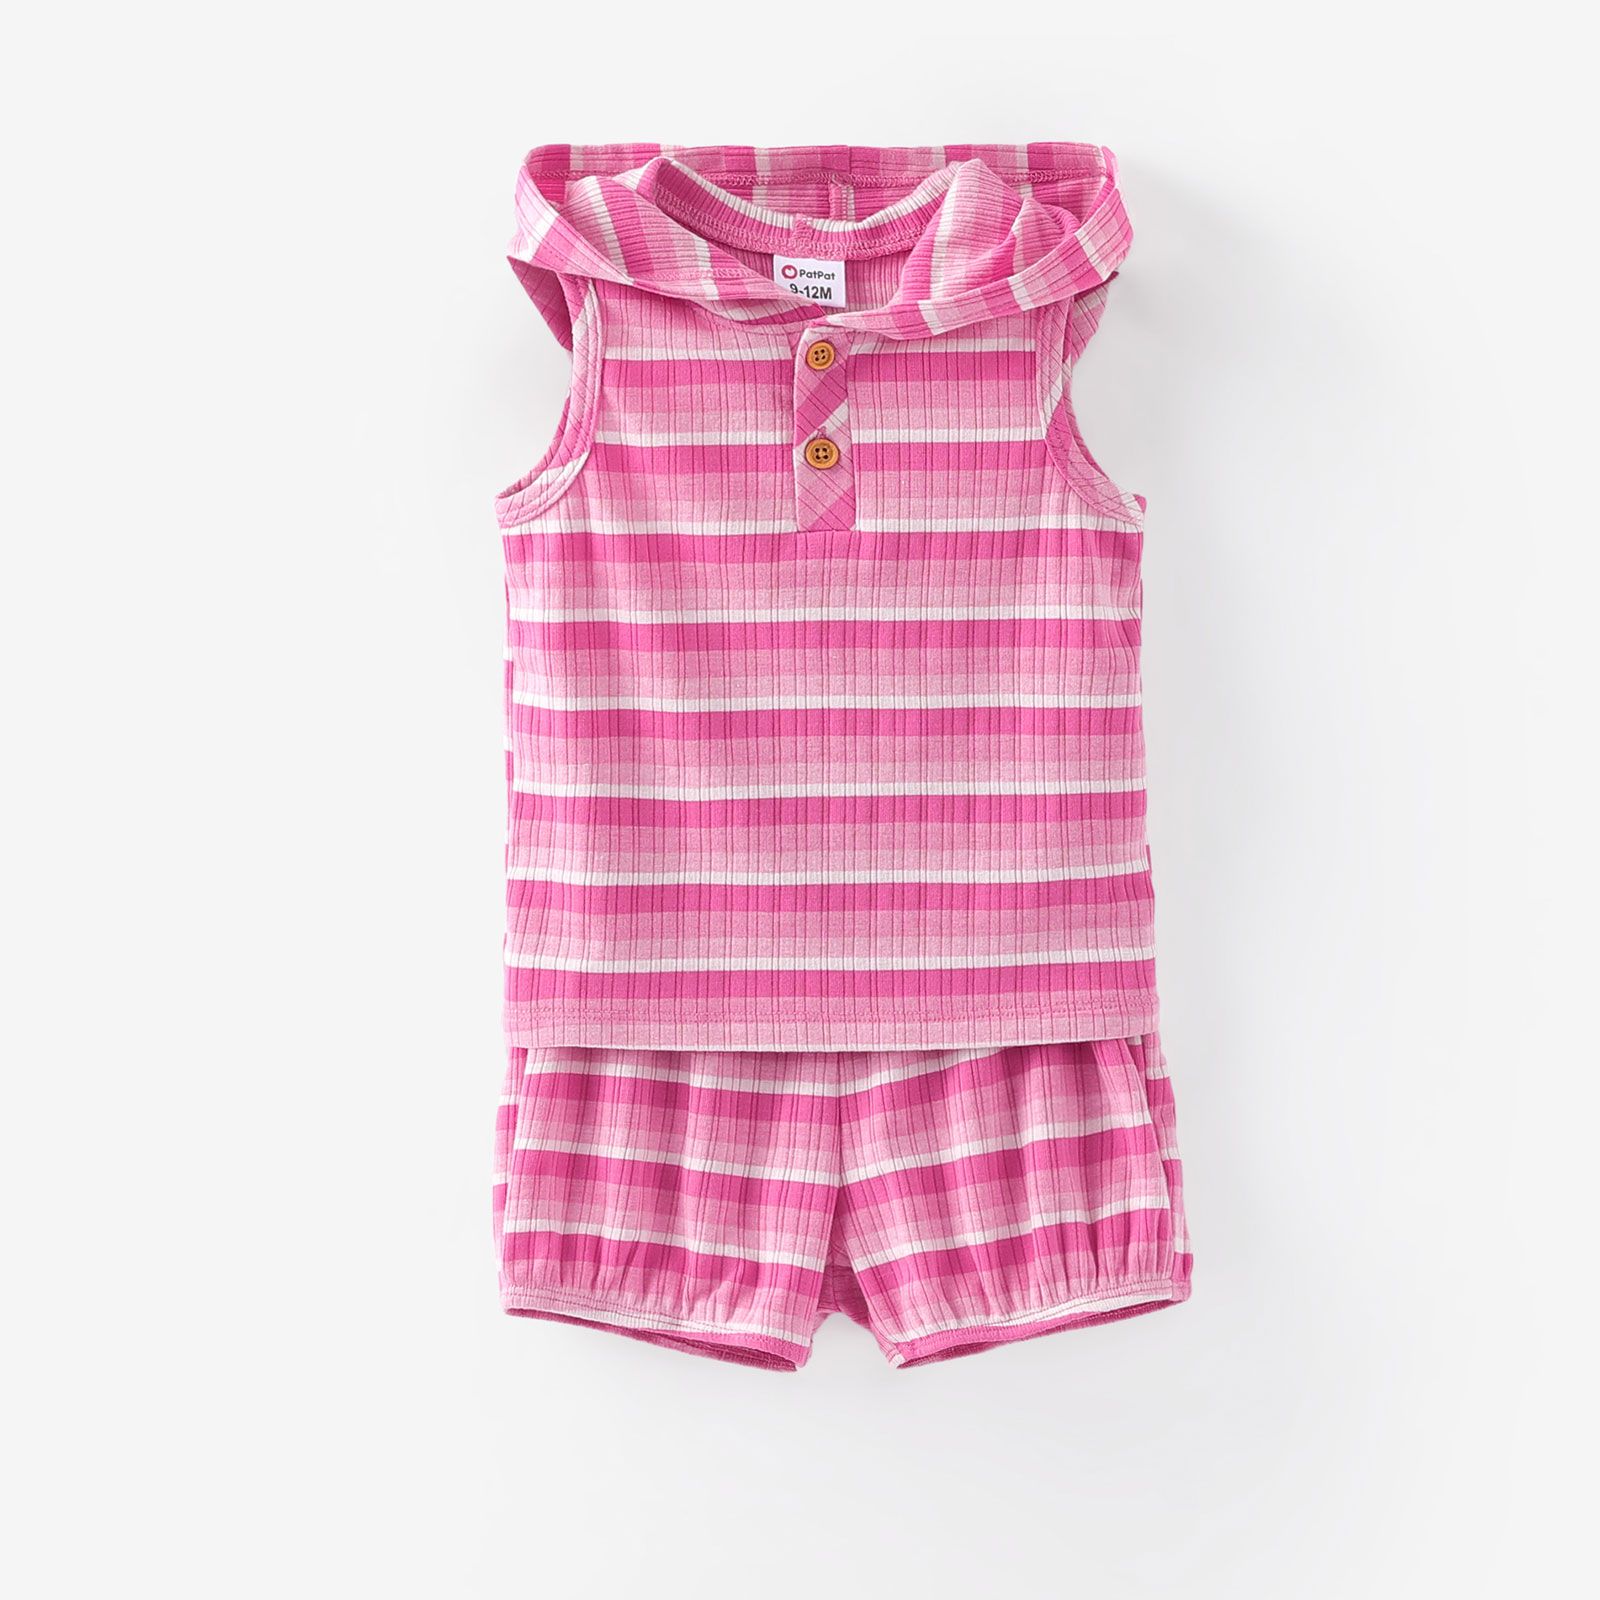 Baby Boy/Girl 2pcs Striped Print Hooded Tank Top and Shorts Set